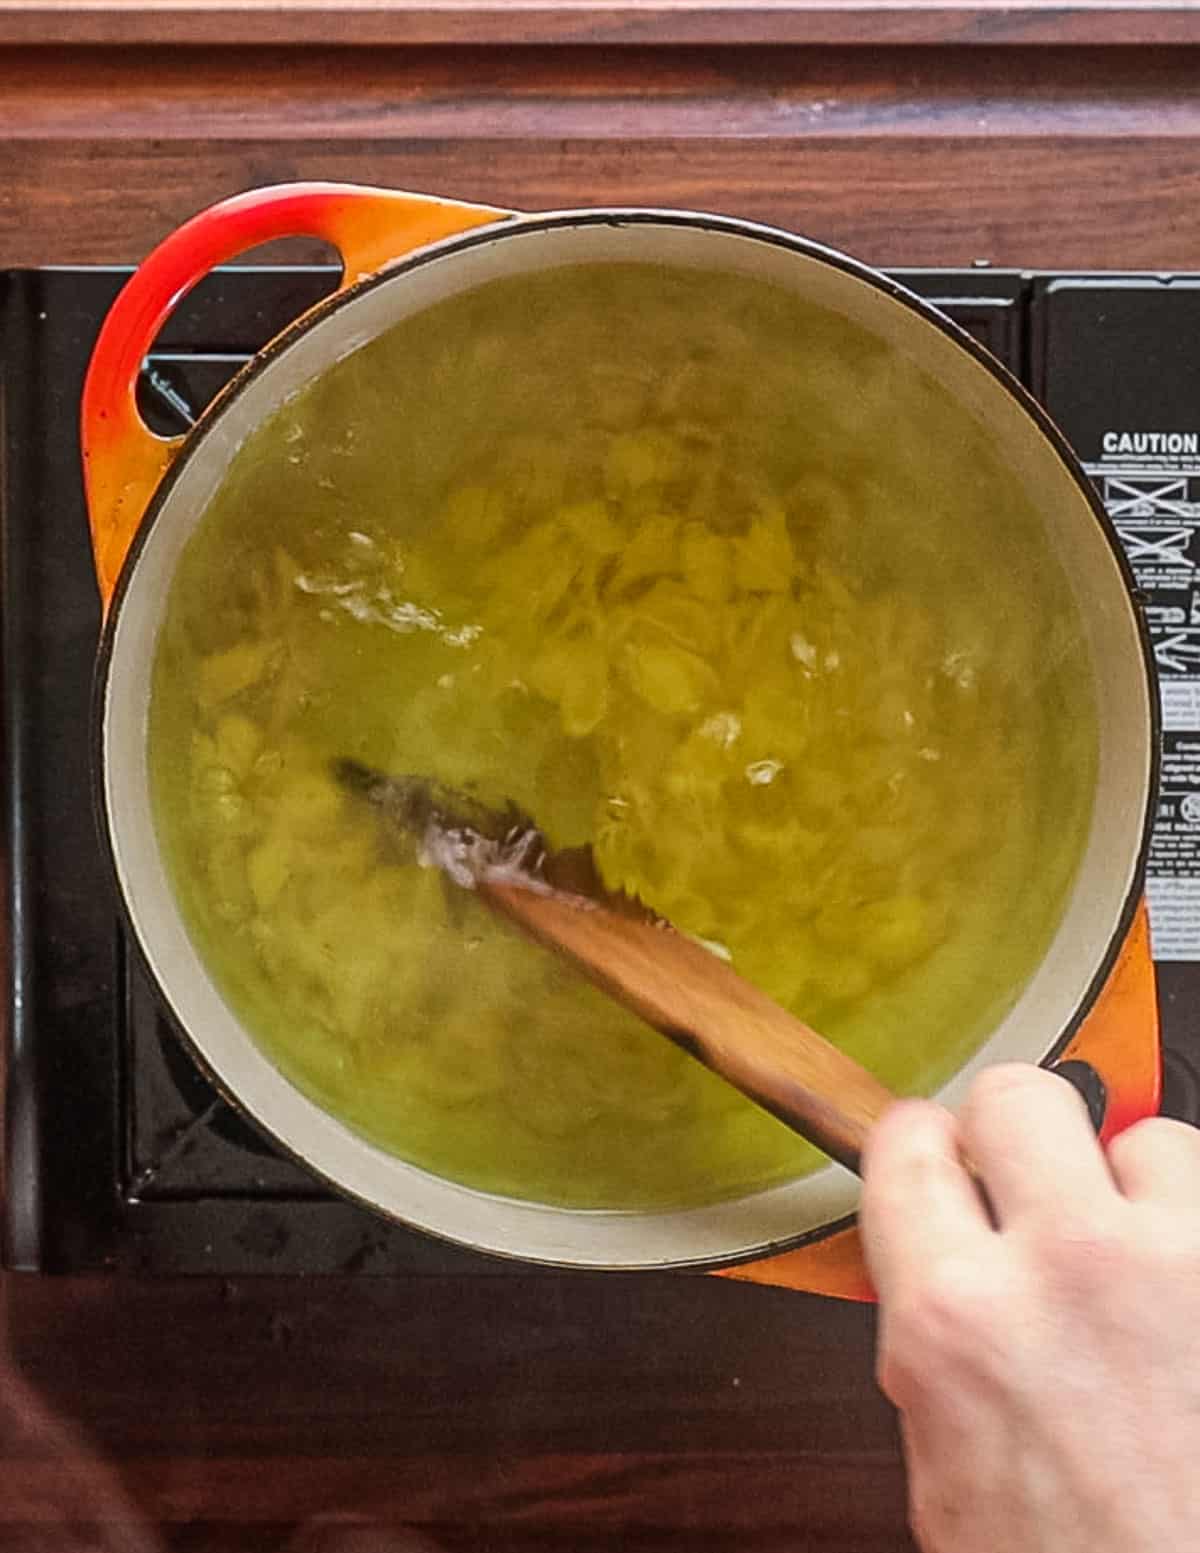 Stirring orechiette pasta to prevent sticking.